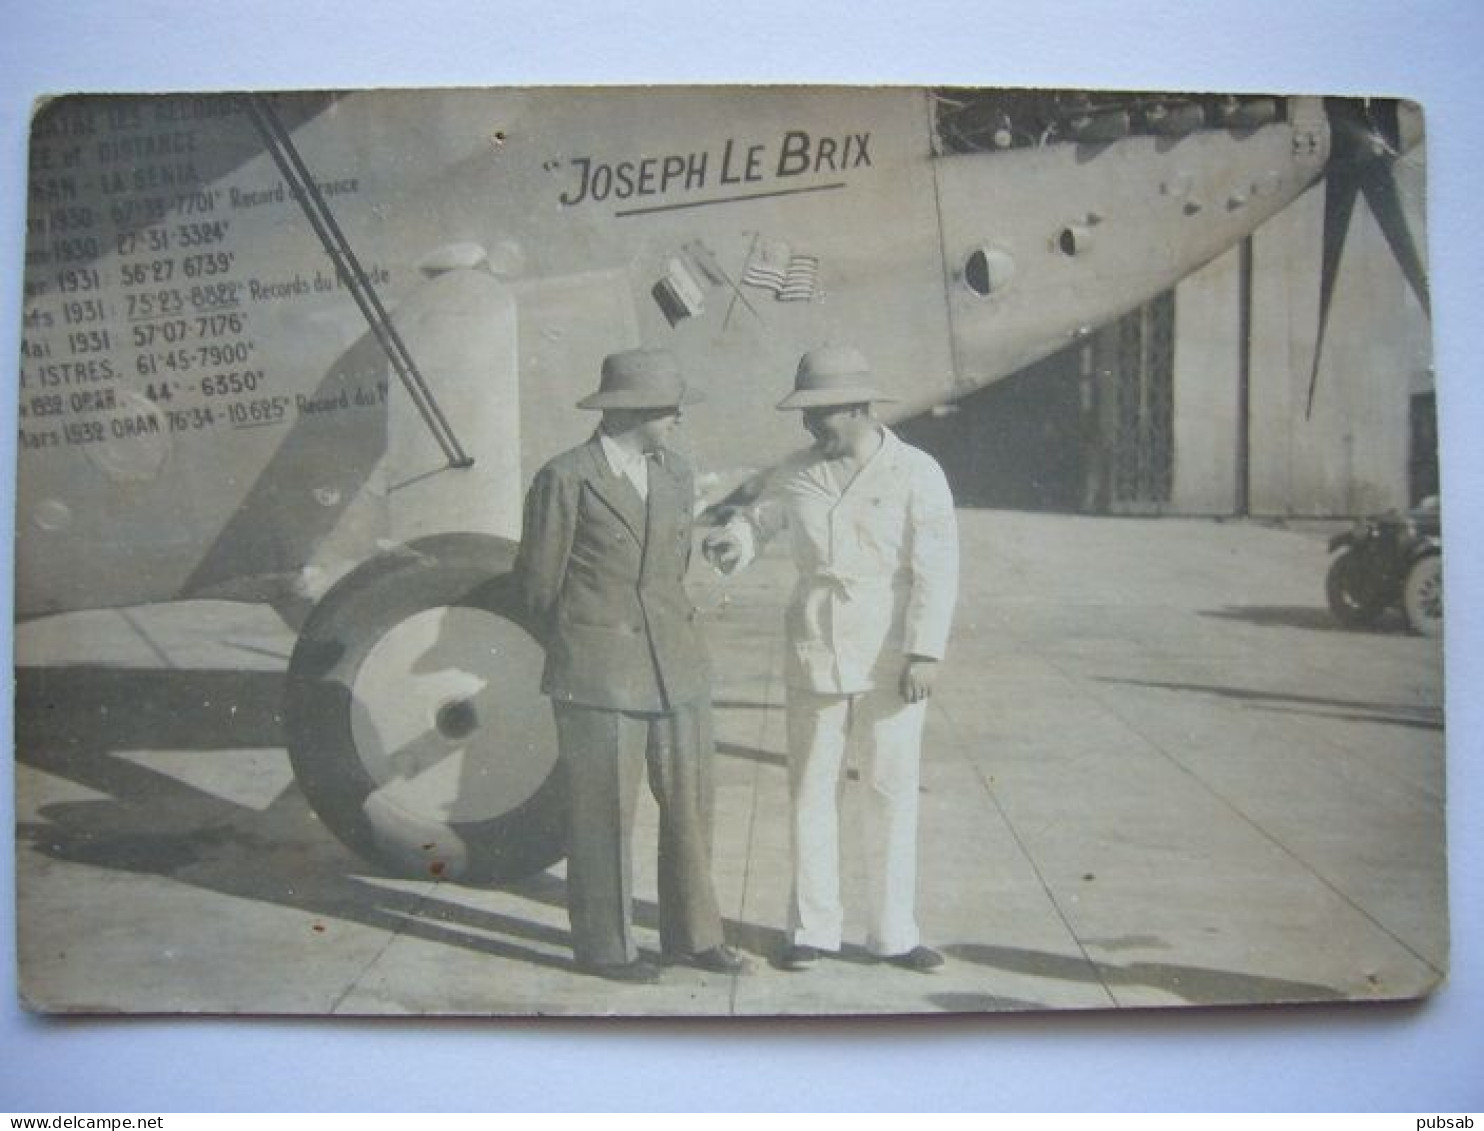 Avion / Airplane / JOSEPH LE BRIX / Blériot 110 / Seen At Alep Airport, Syria / Jan 2,1935 - 1919-1938: Between Wars